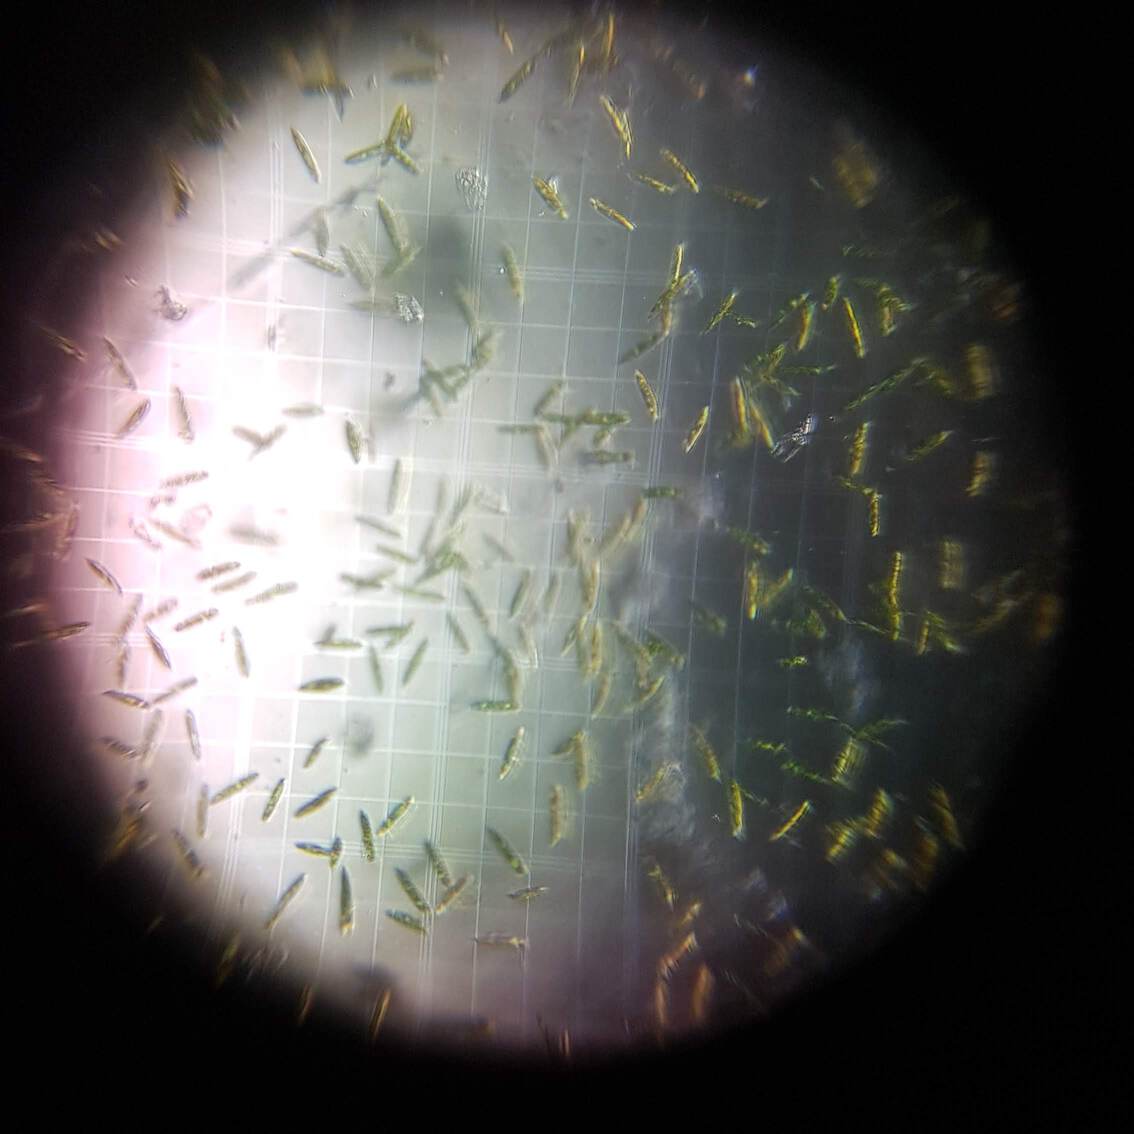 *Euglena gracilis* on a hemocytometer viewed under a DIY lasercut microscope